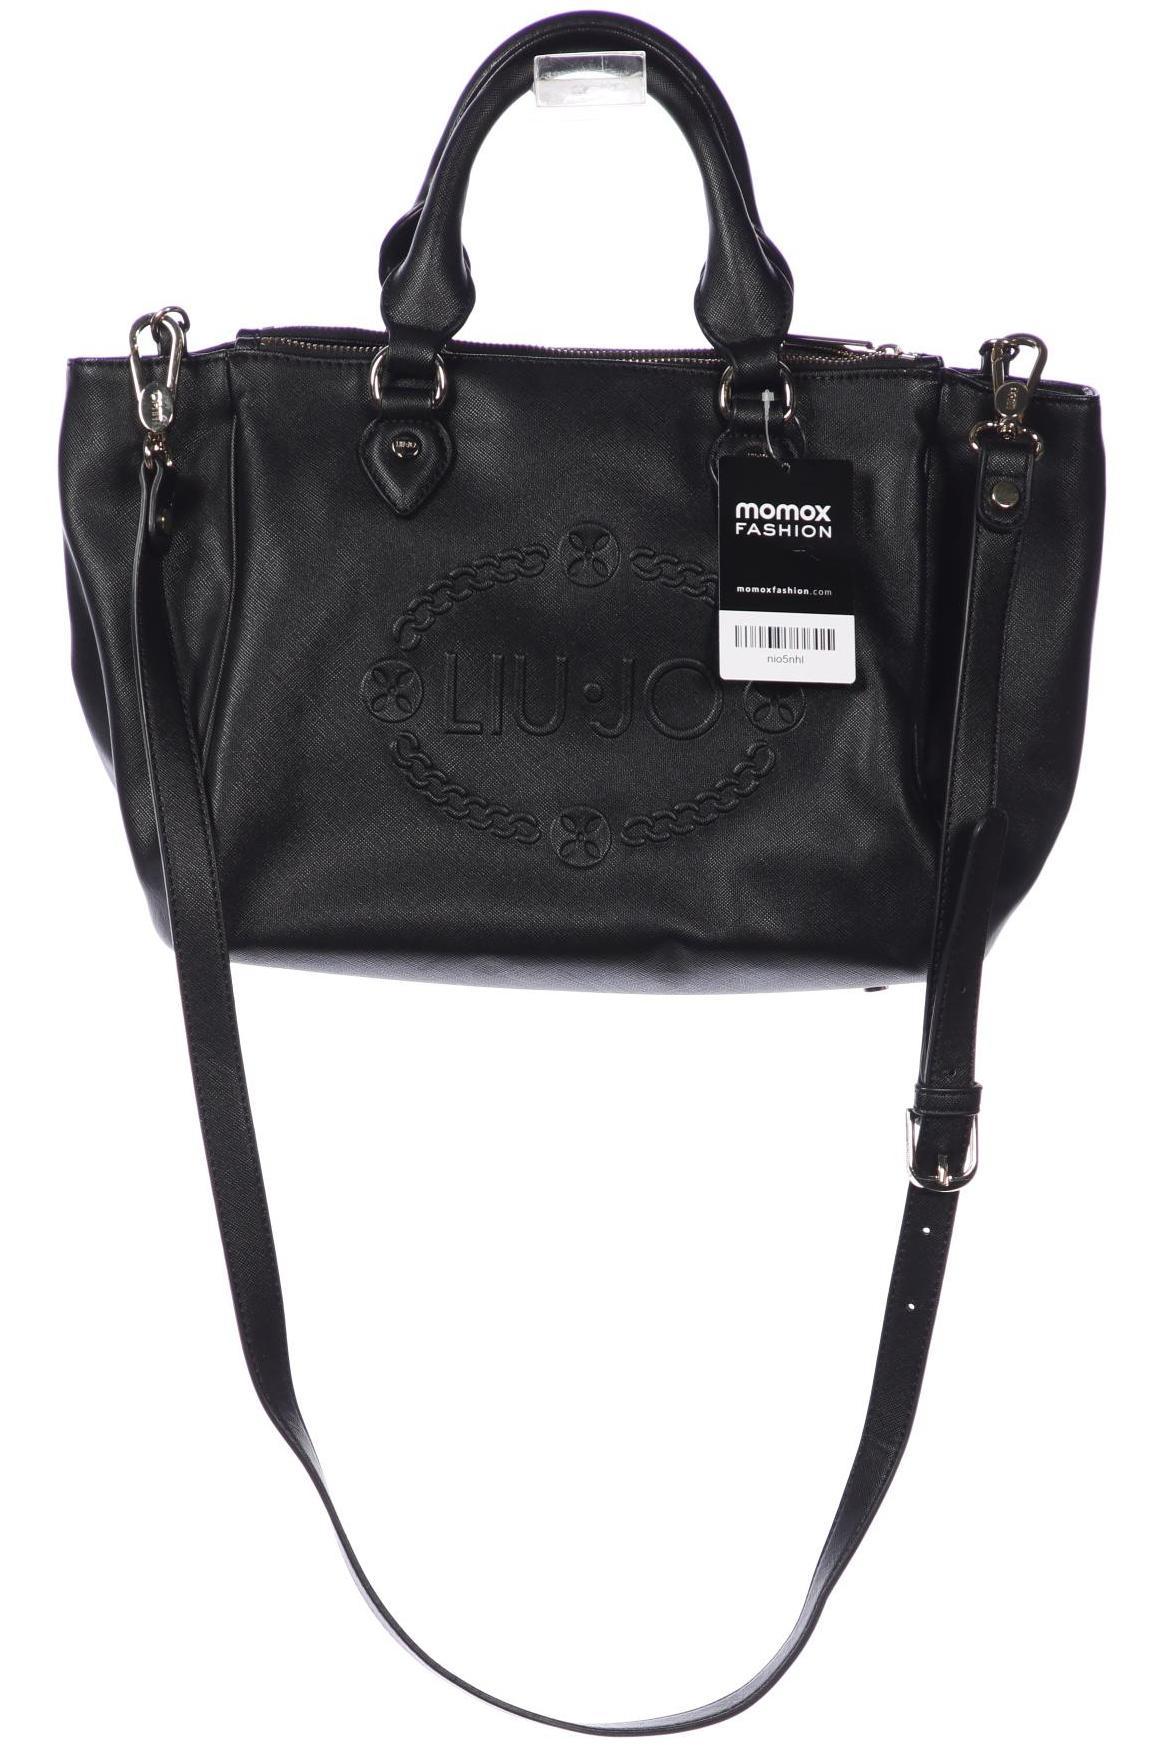 LIU JO Damen Handtasche, schwarz von LIU JO